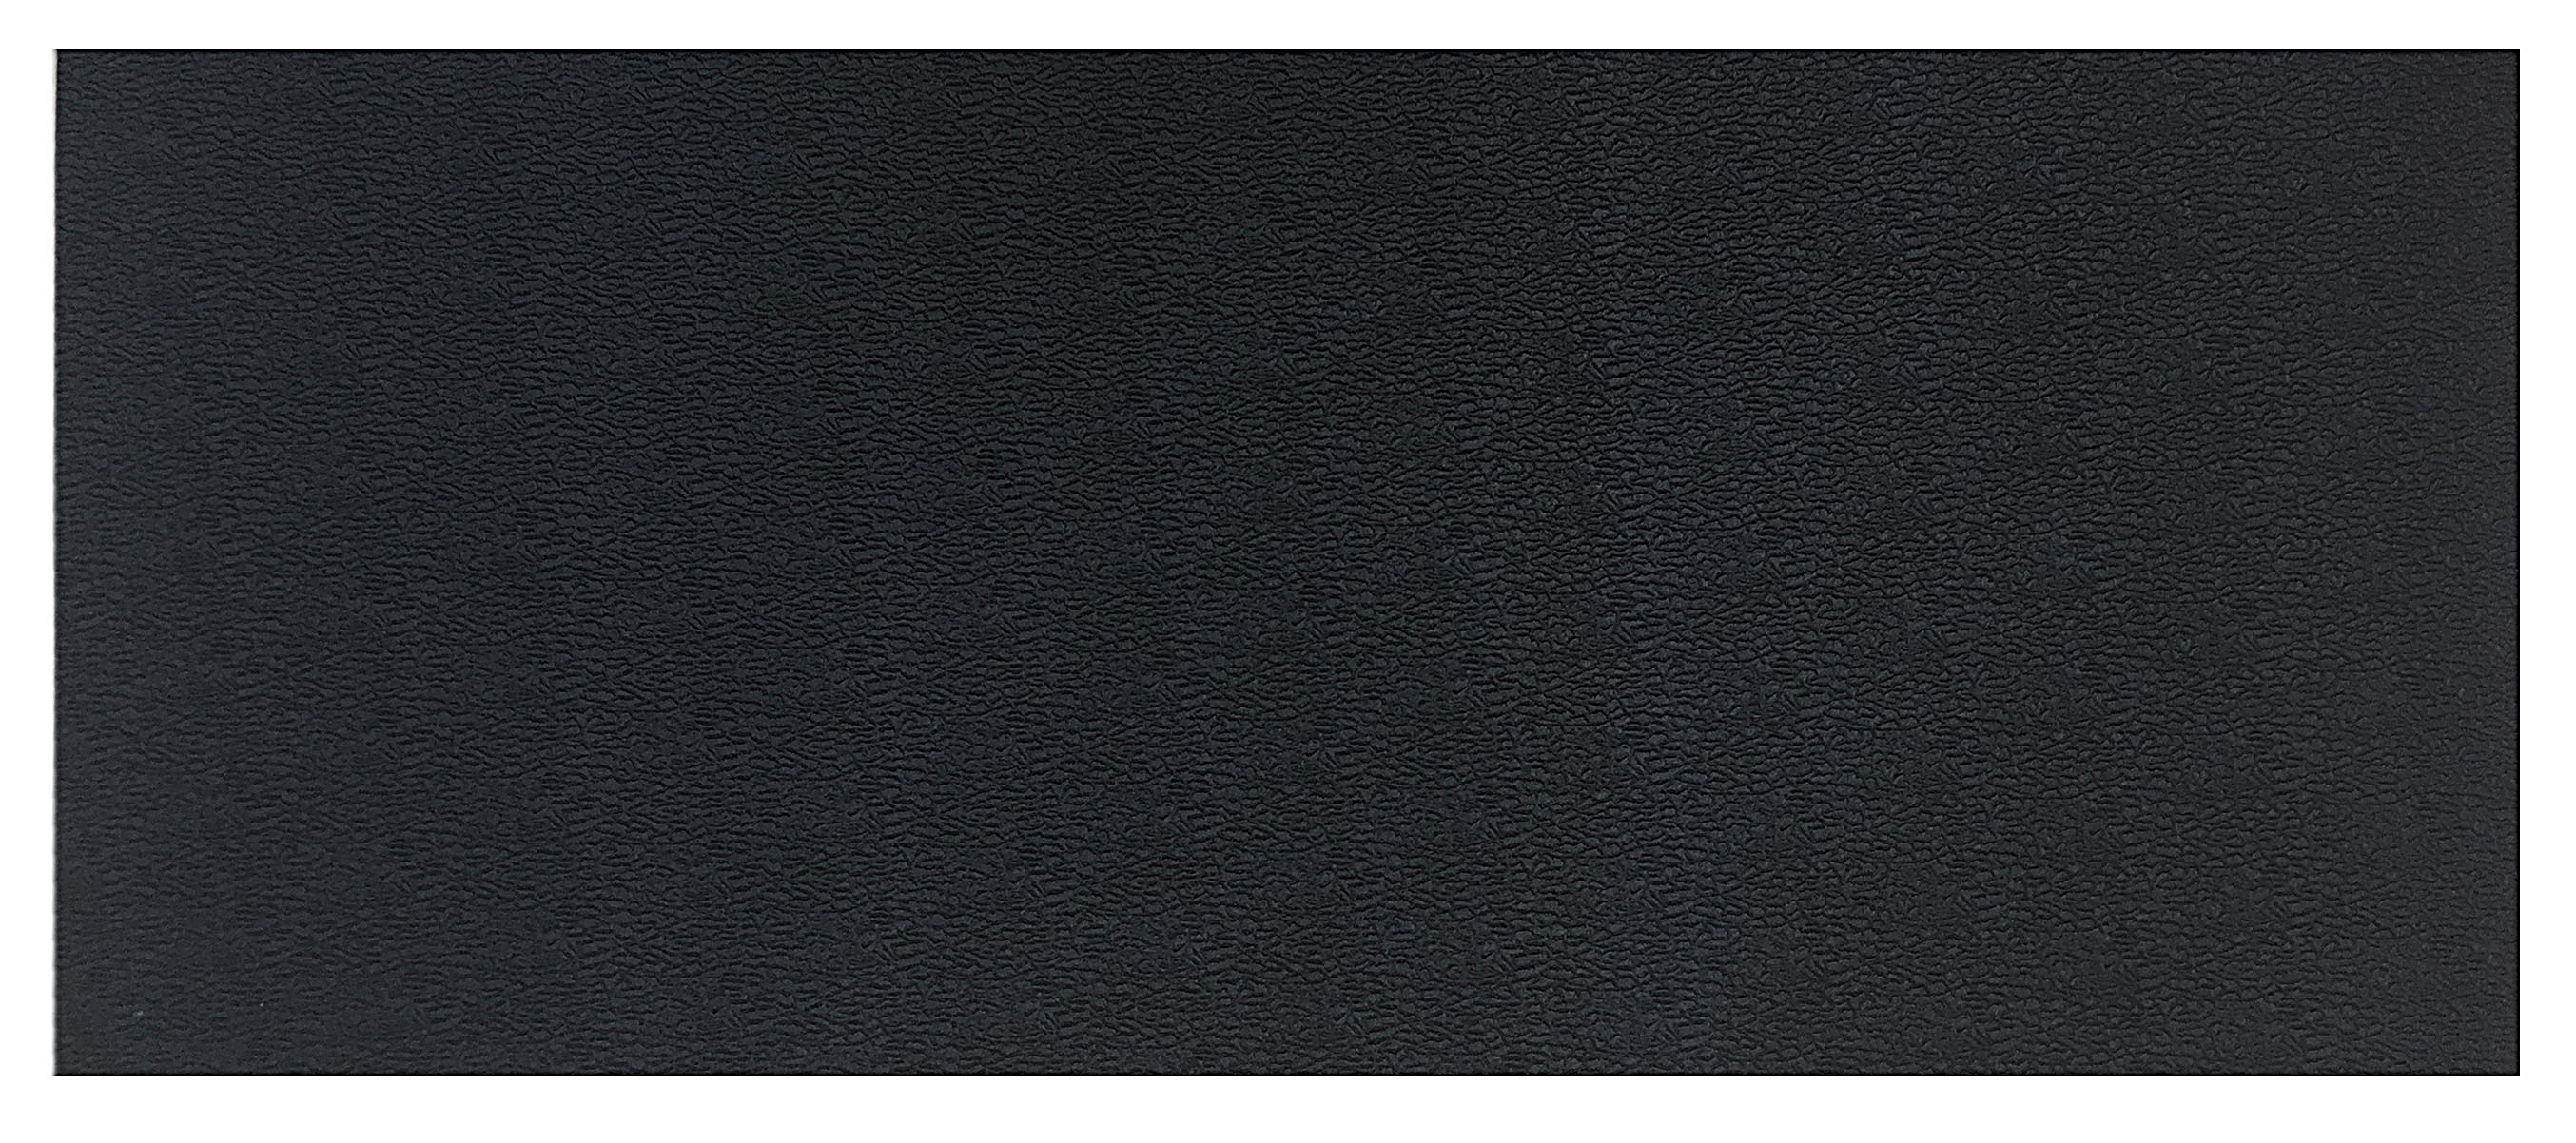 SuperMats - Treadmill Mat - Standard Quality Dense Foam Vinyl - Fitness Equipment Mat, Black, 30 In. x 72 In. - image 4 of 4